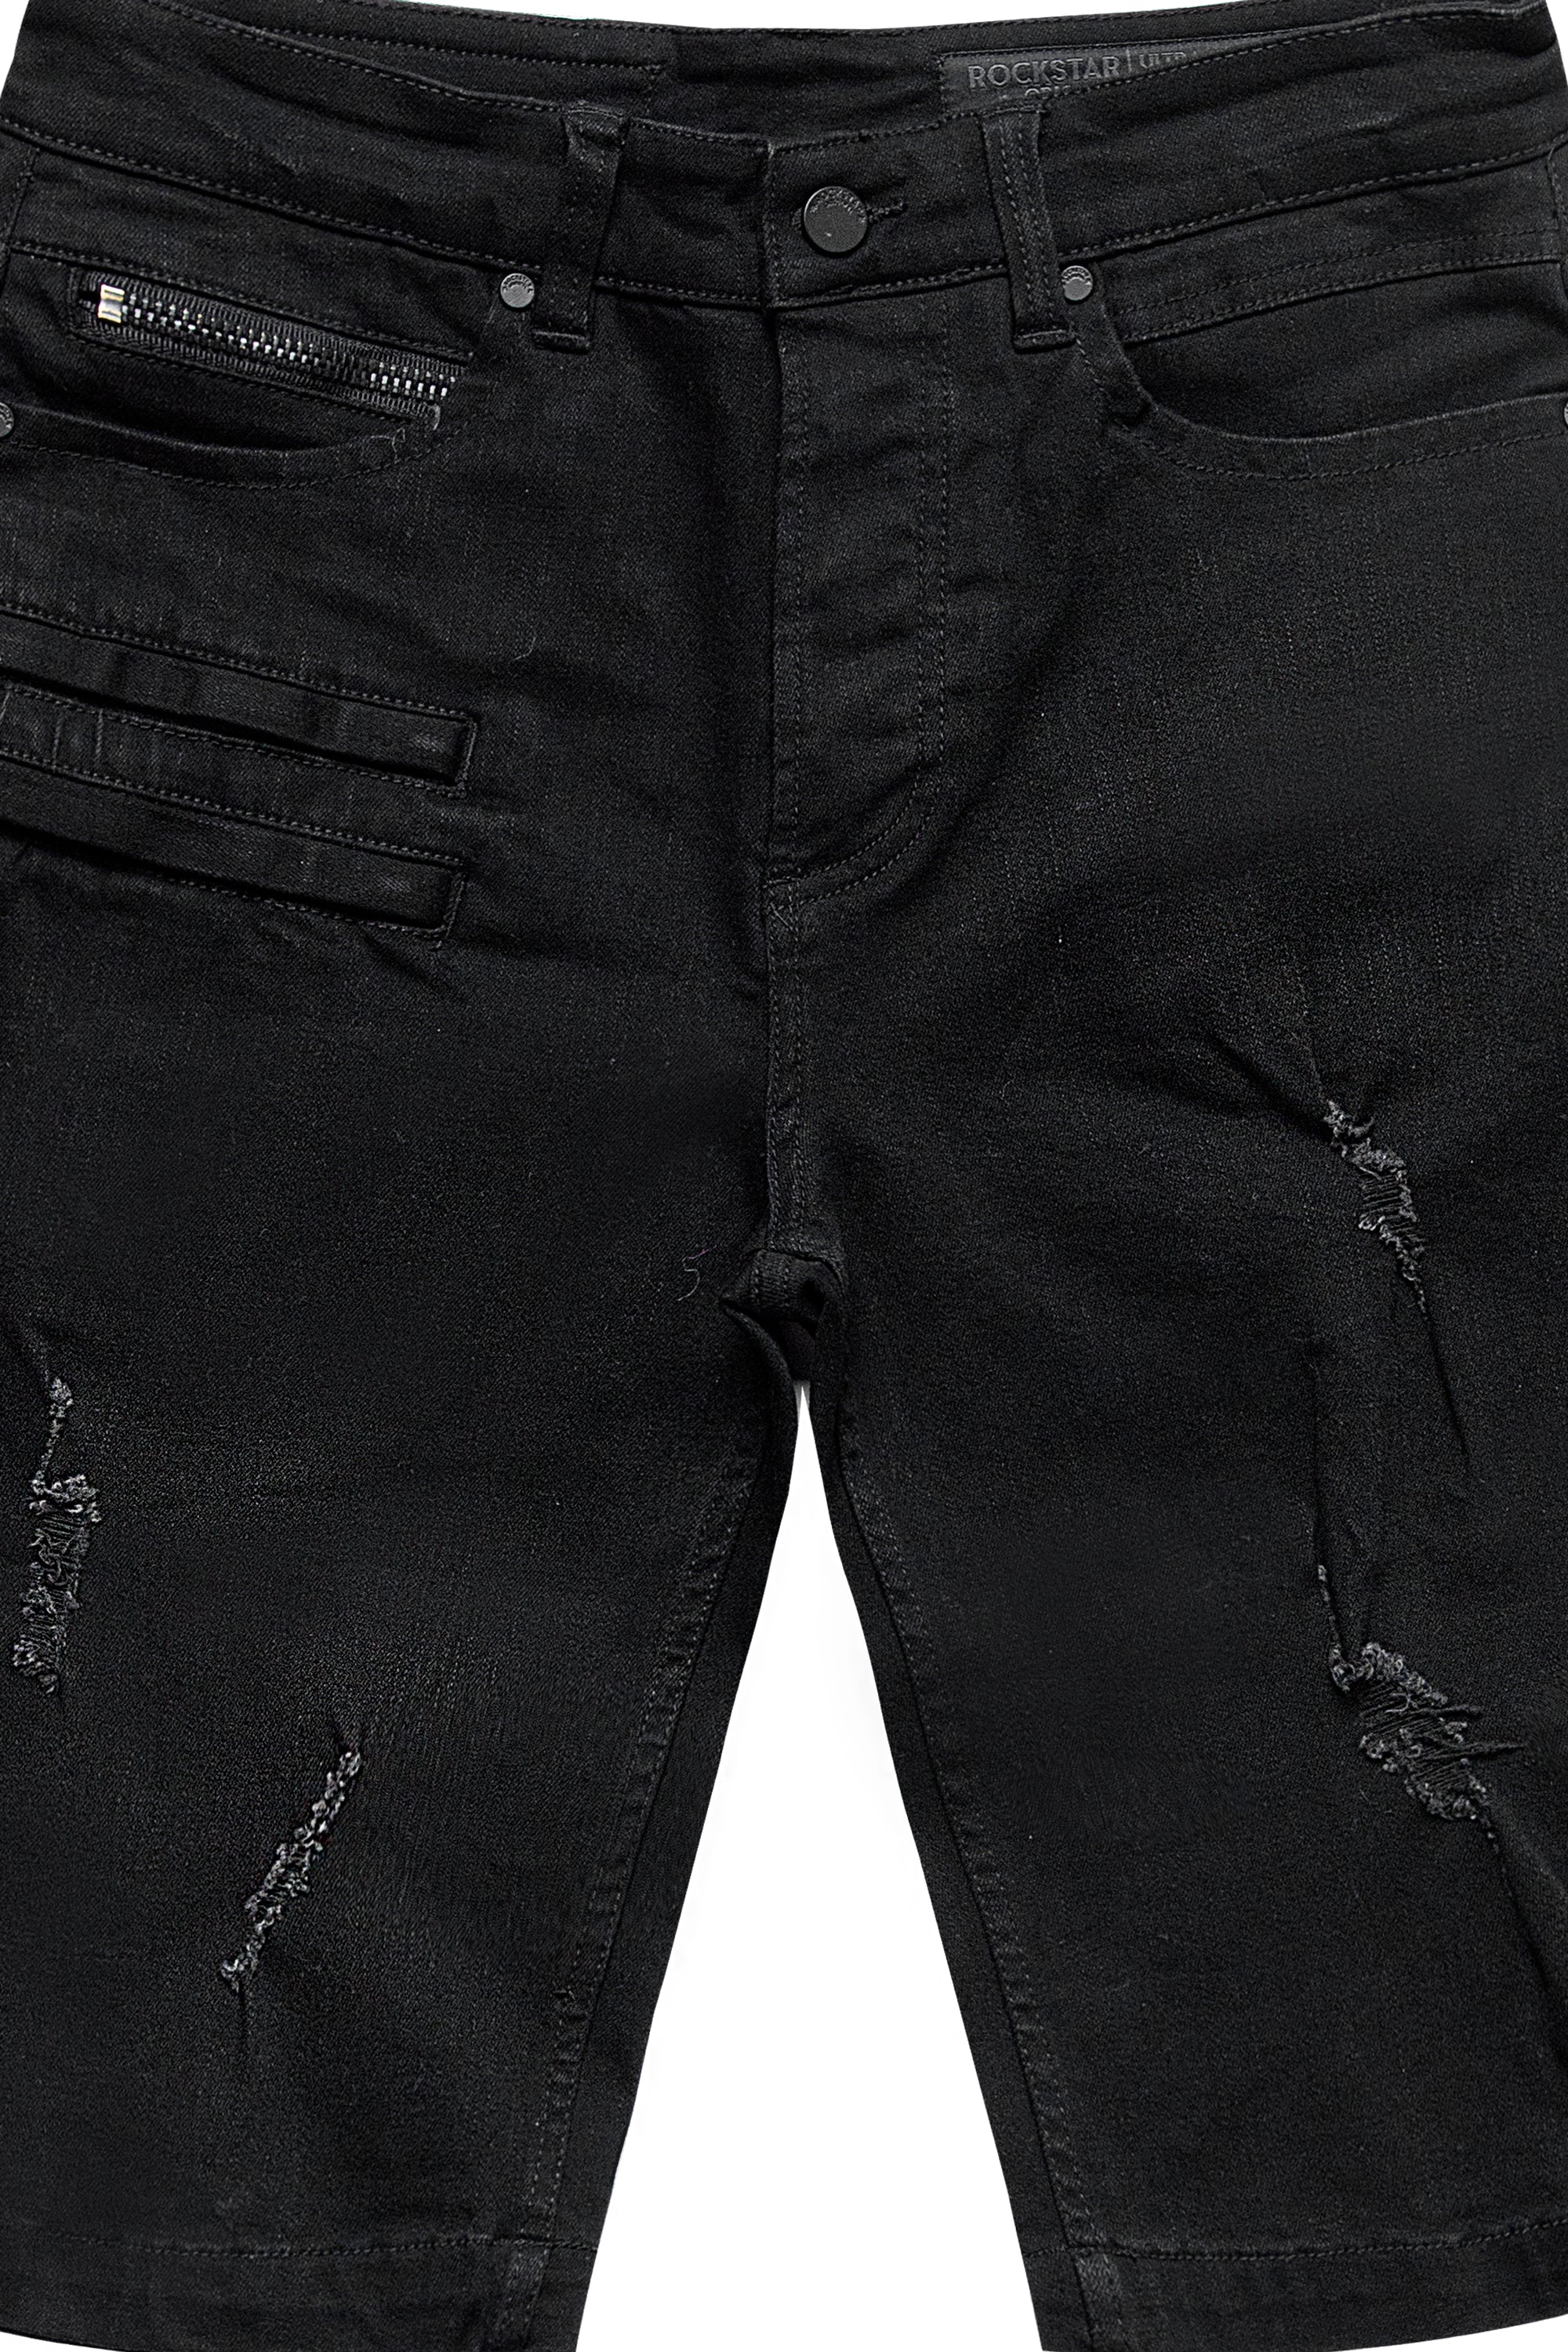 rockstaroriginal #jeans #review #fyp #june #lookinggood #lovin #foryo, Jeans